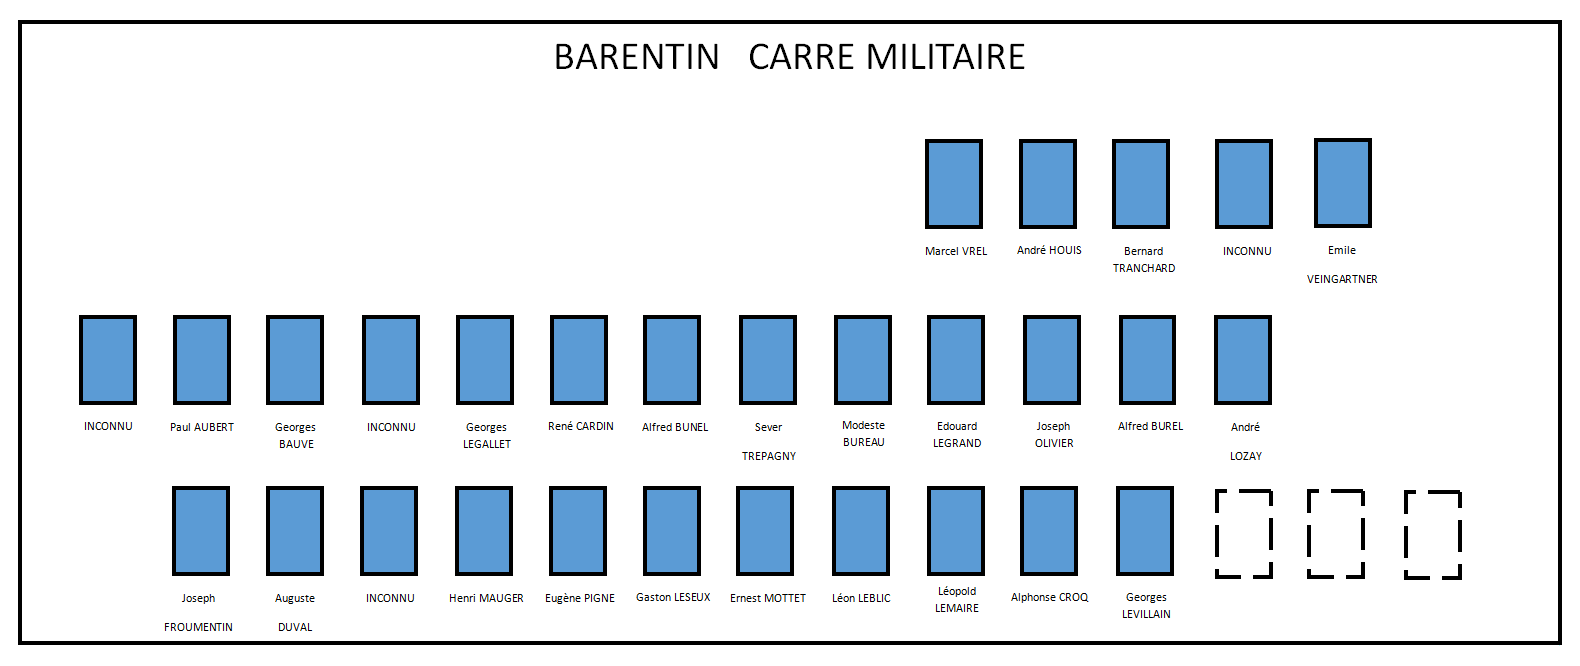 Barentin carre militaire